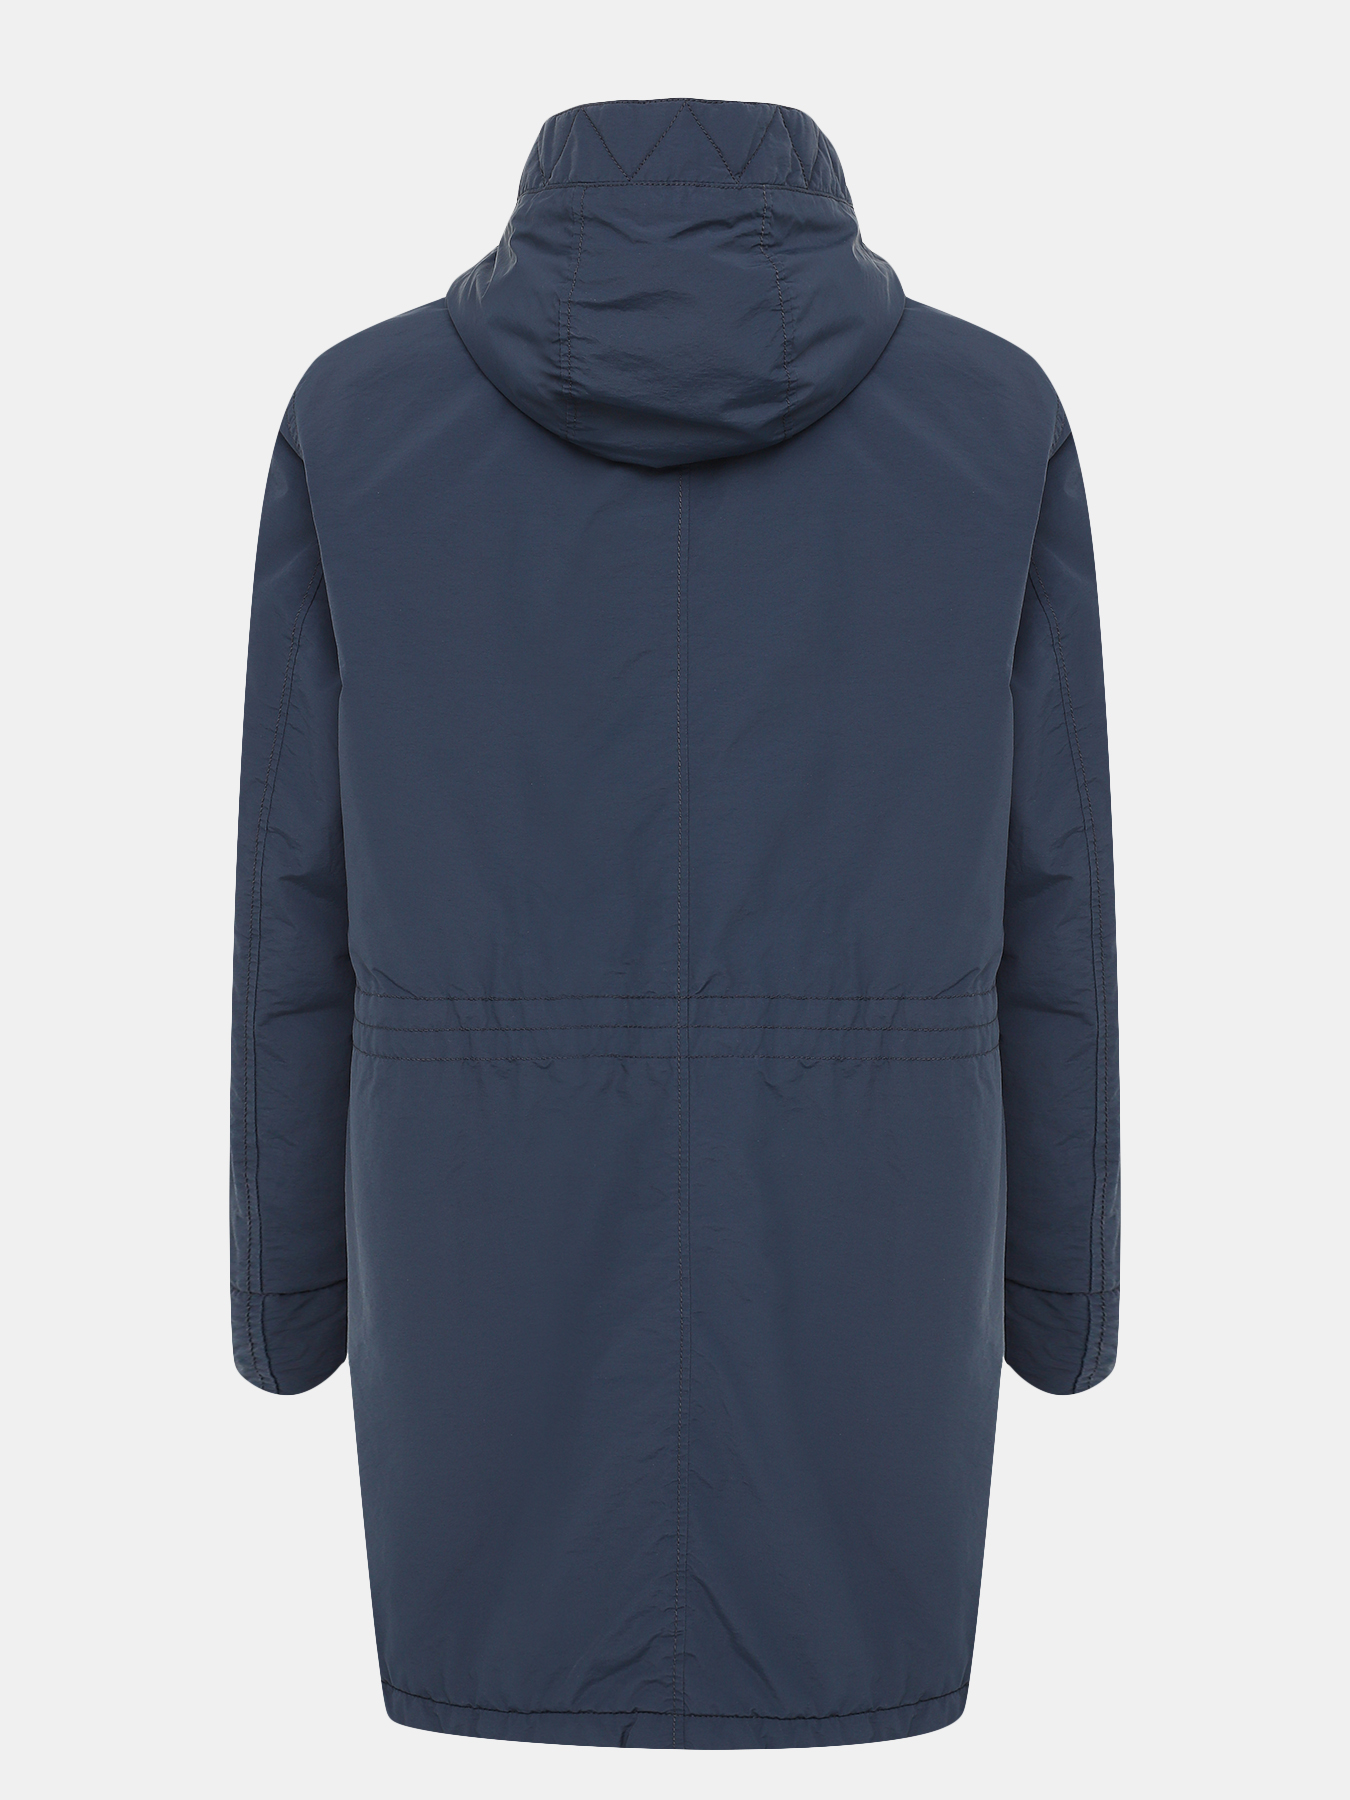 Удлиненная куртка Olgara BOSS 437906-026, цвет темно-синий, размер 50 - фото 5